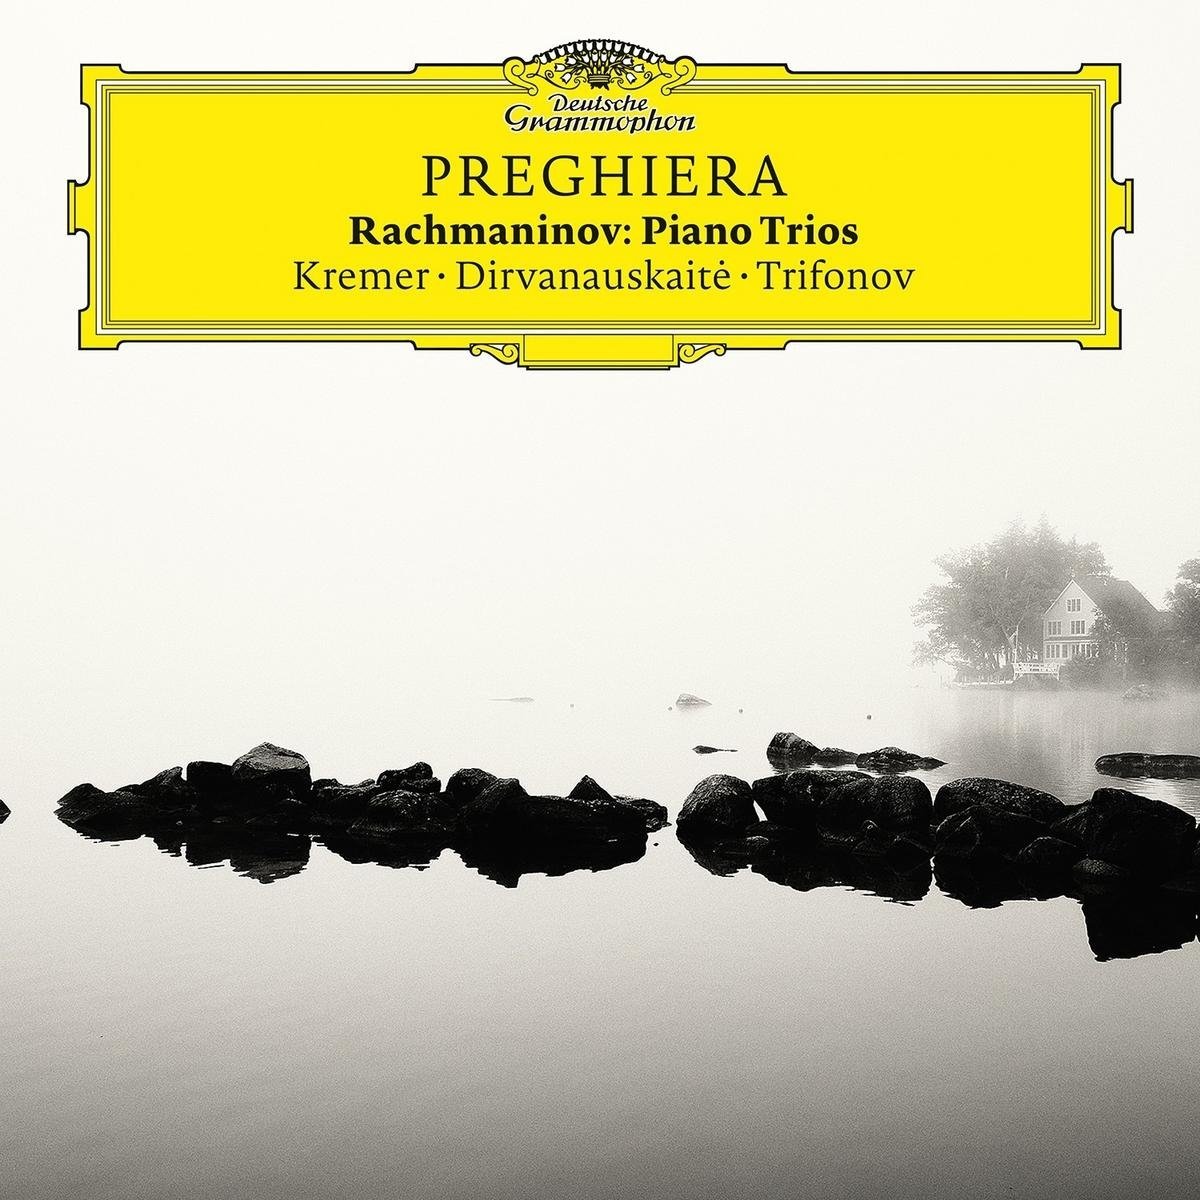 Kremer, Dirvanauskaite, Trifonov - "Preghiera" (Rachmaninov : Piano Trios) (2017) [FLAC 24bit/96kHz]